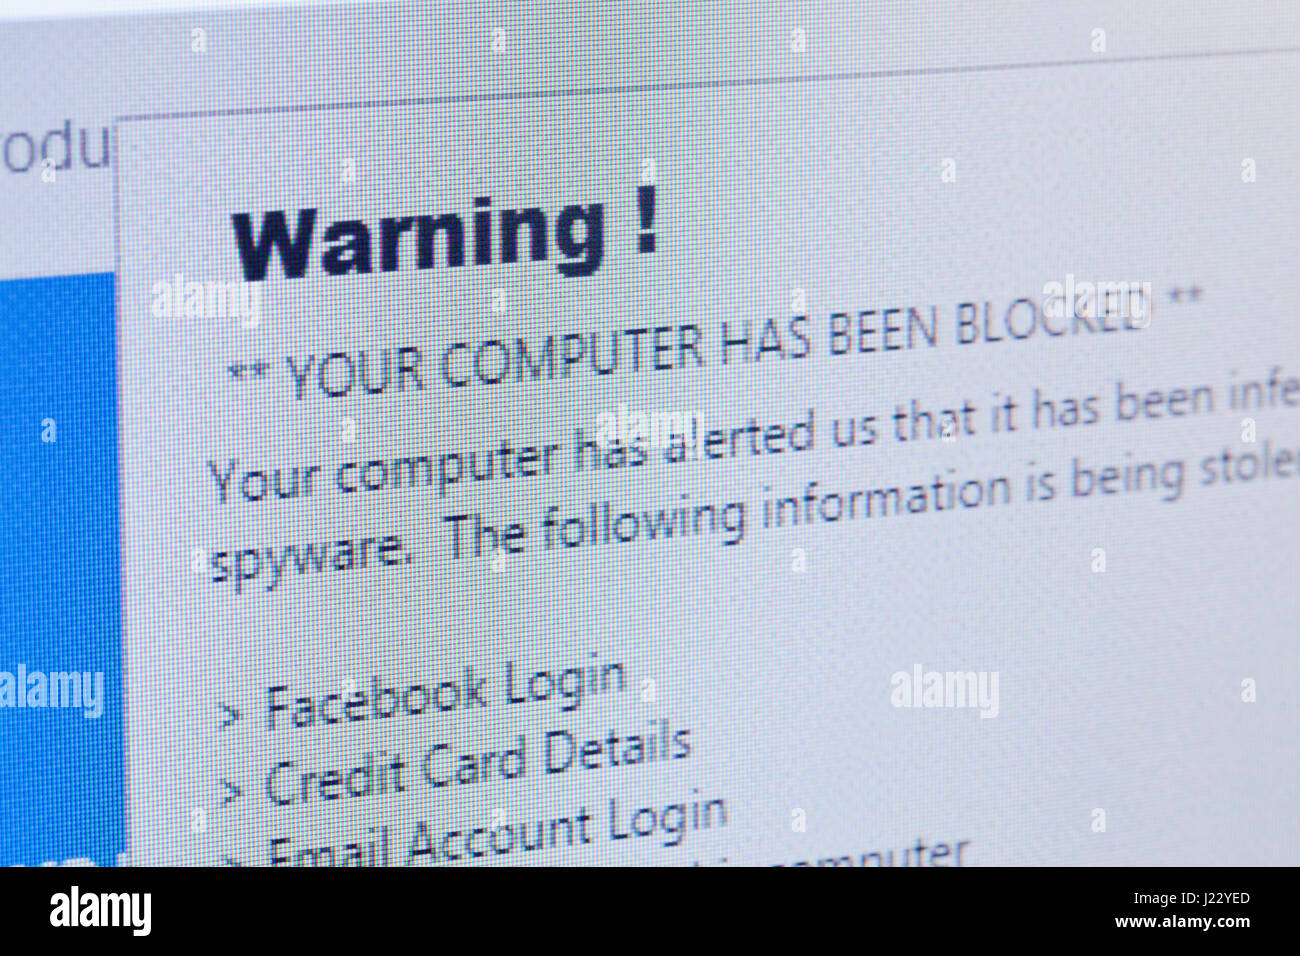 Malware (spyware) warning message on computer screen - USA Stock Photo